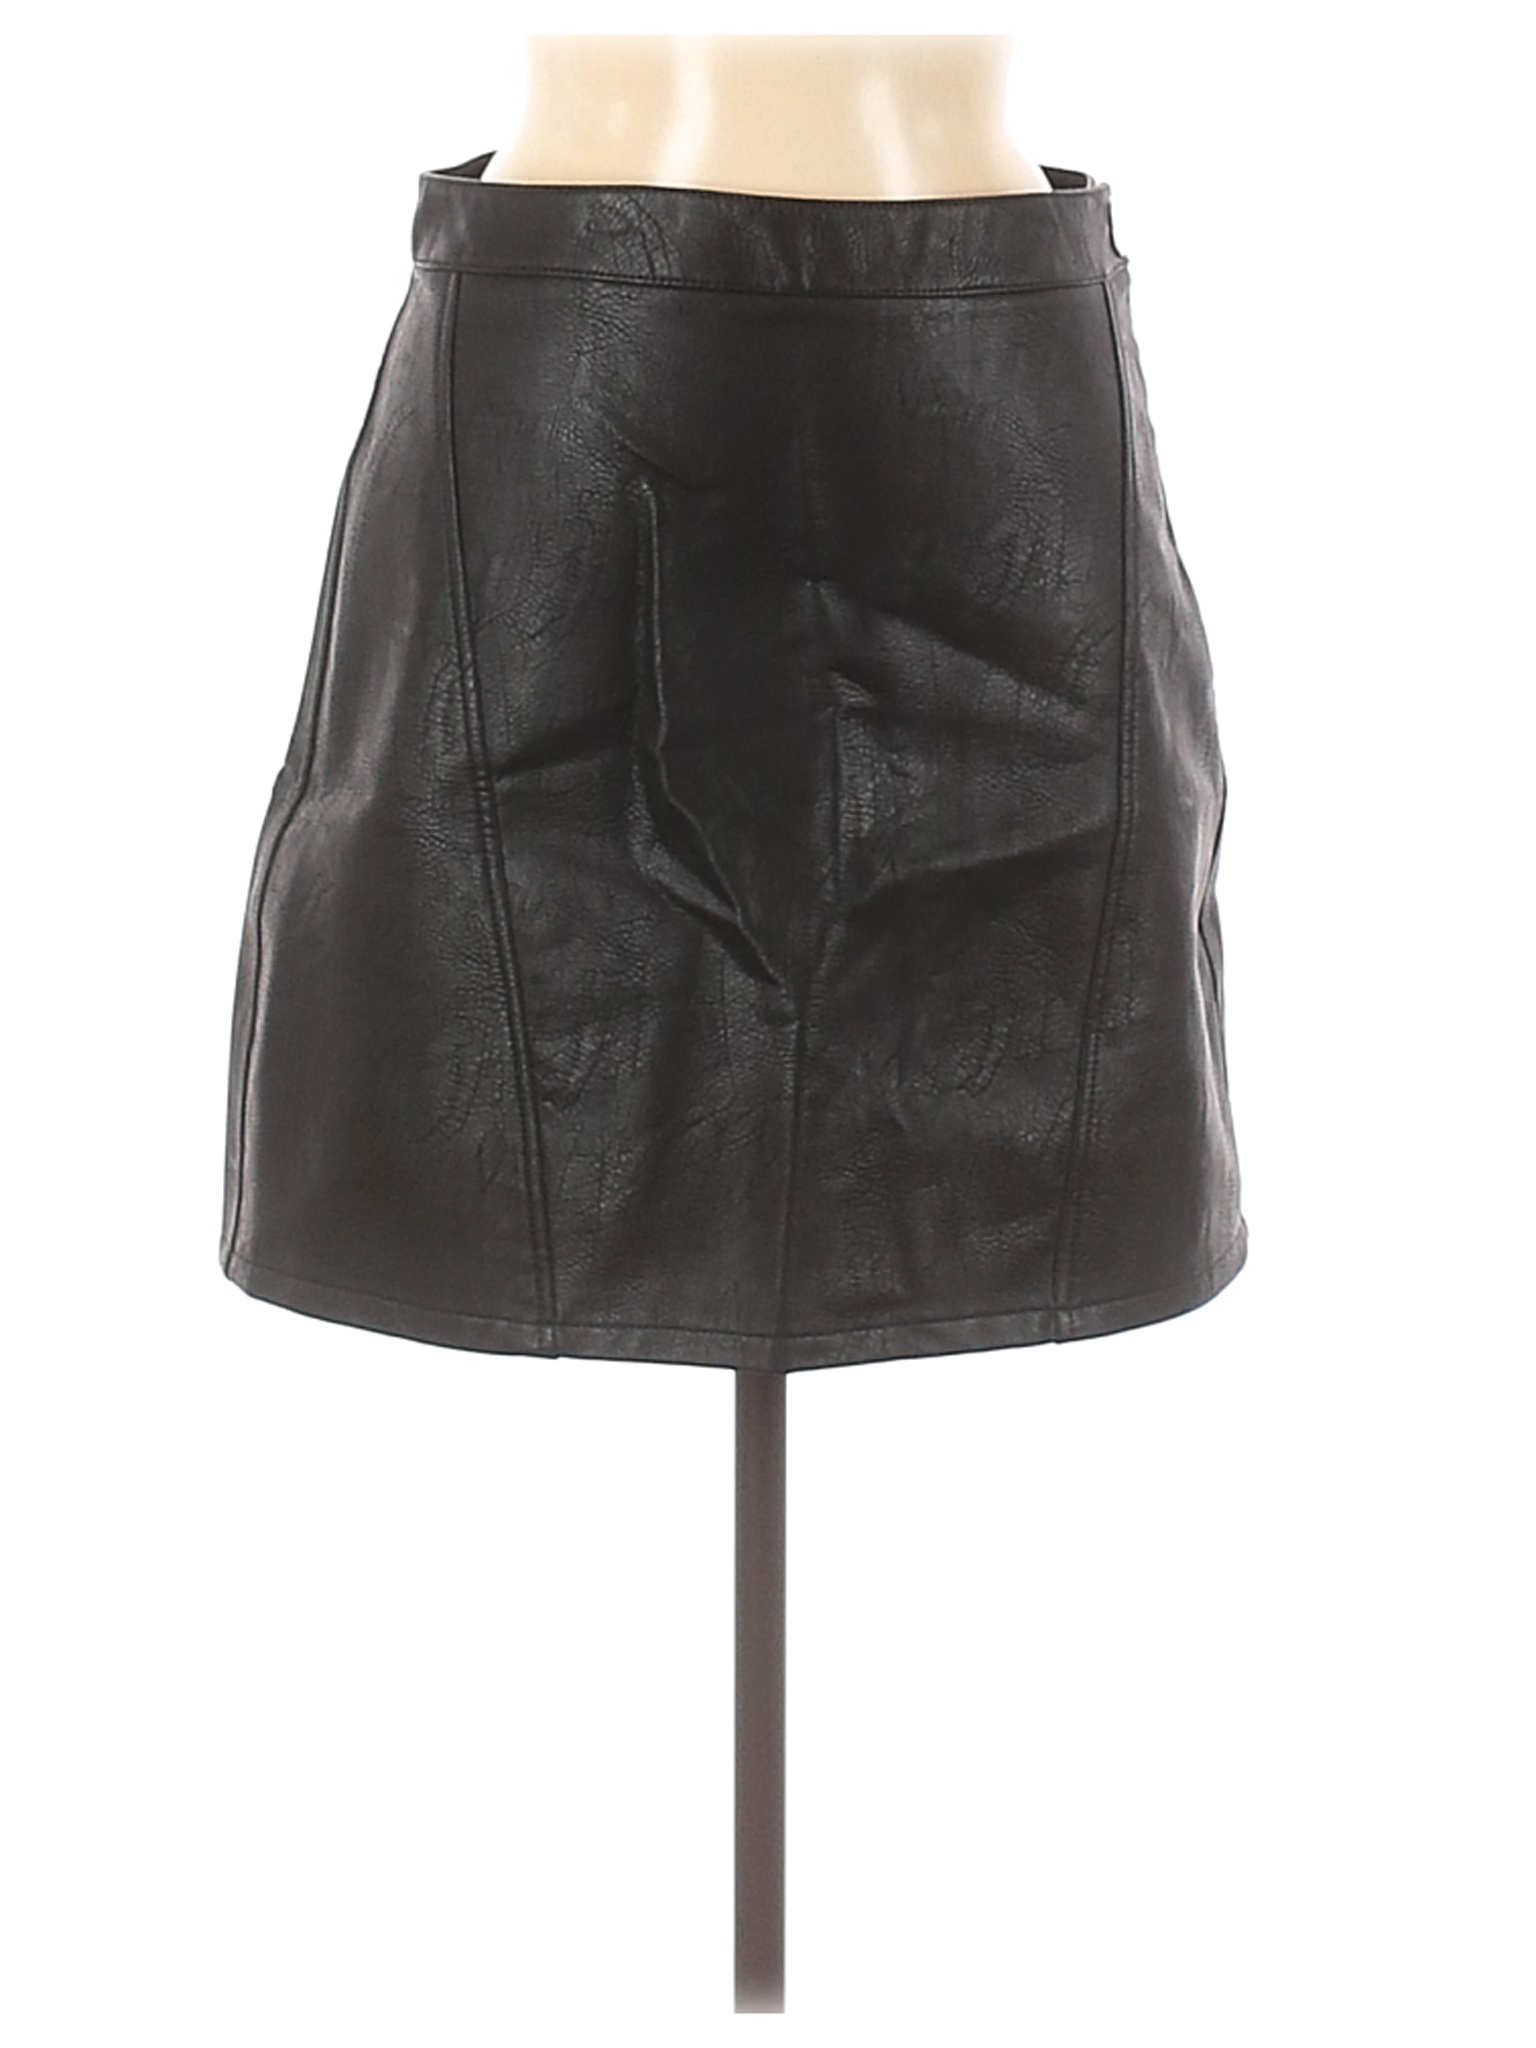 NWT Zara Basic Women Black Faux Leather Skirt M | eBay